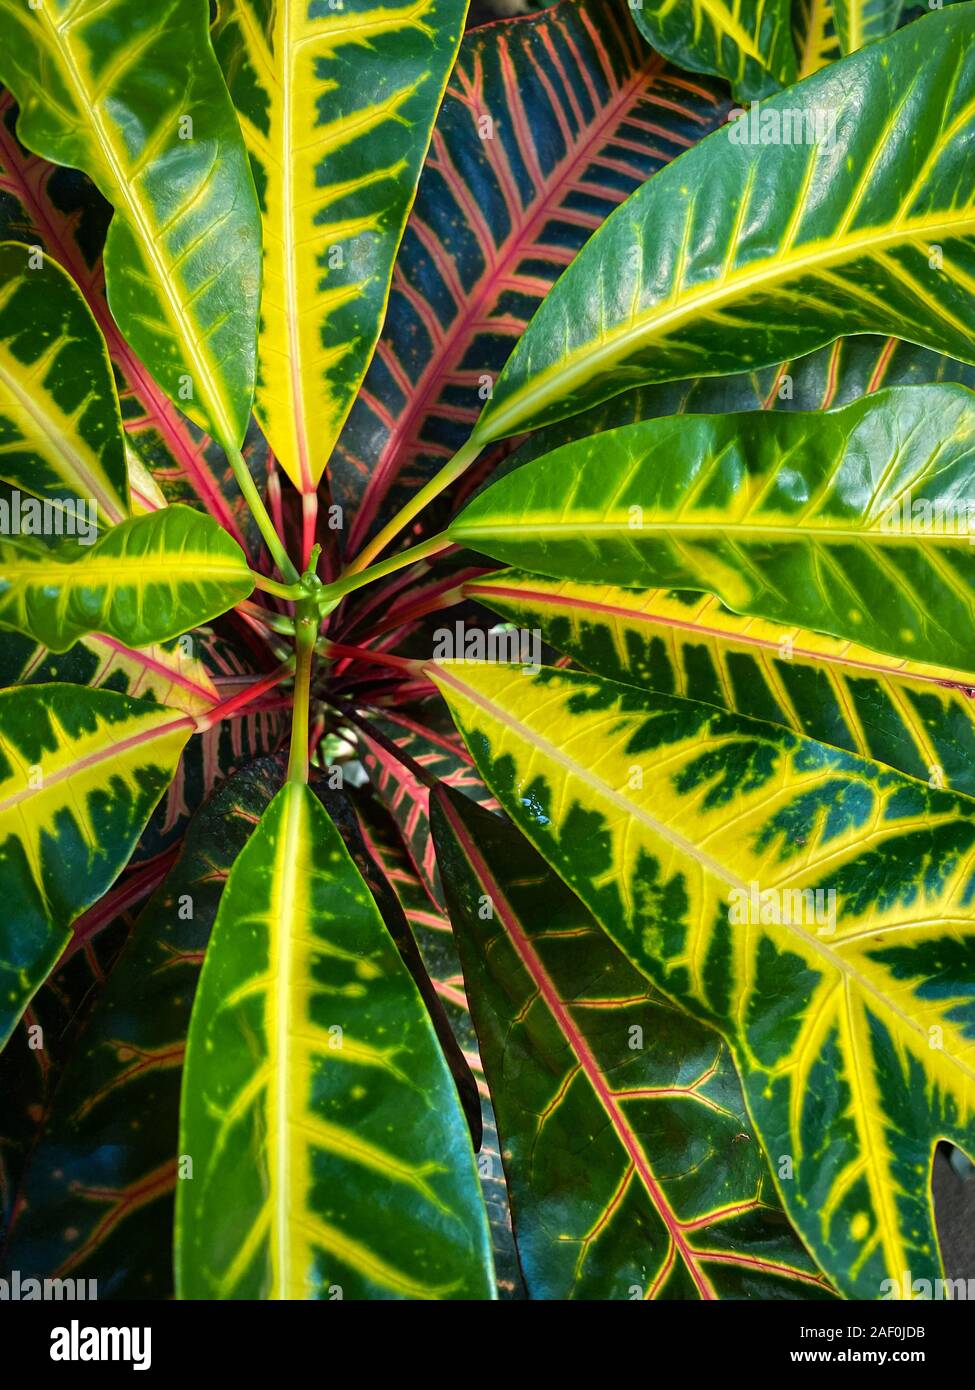 Verde di piante tropicali in giardino giungla close up di foglie Foto Stock